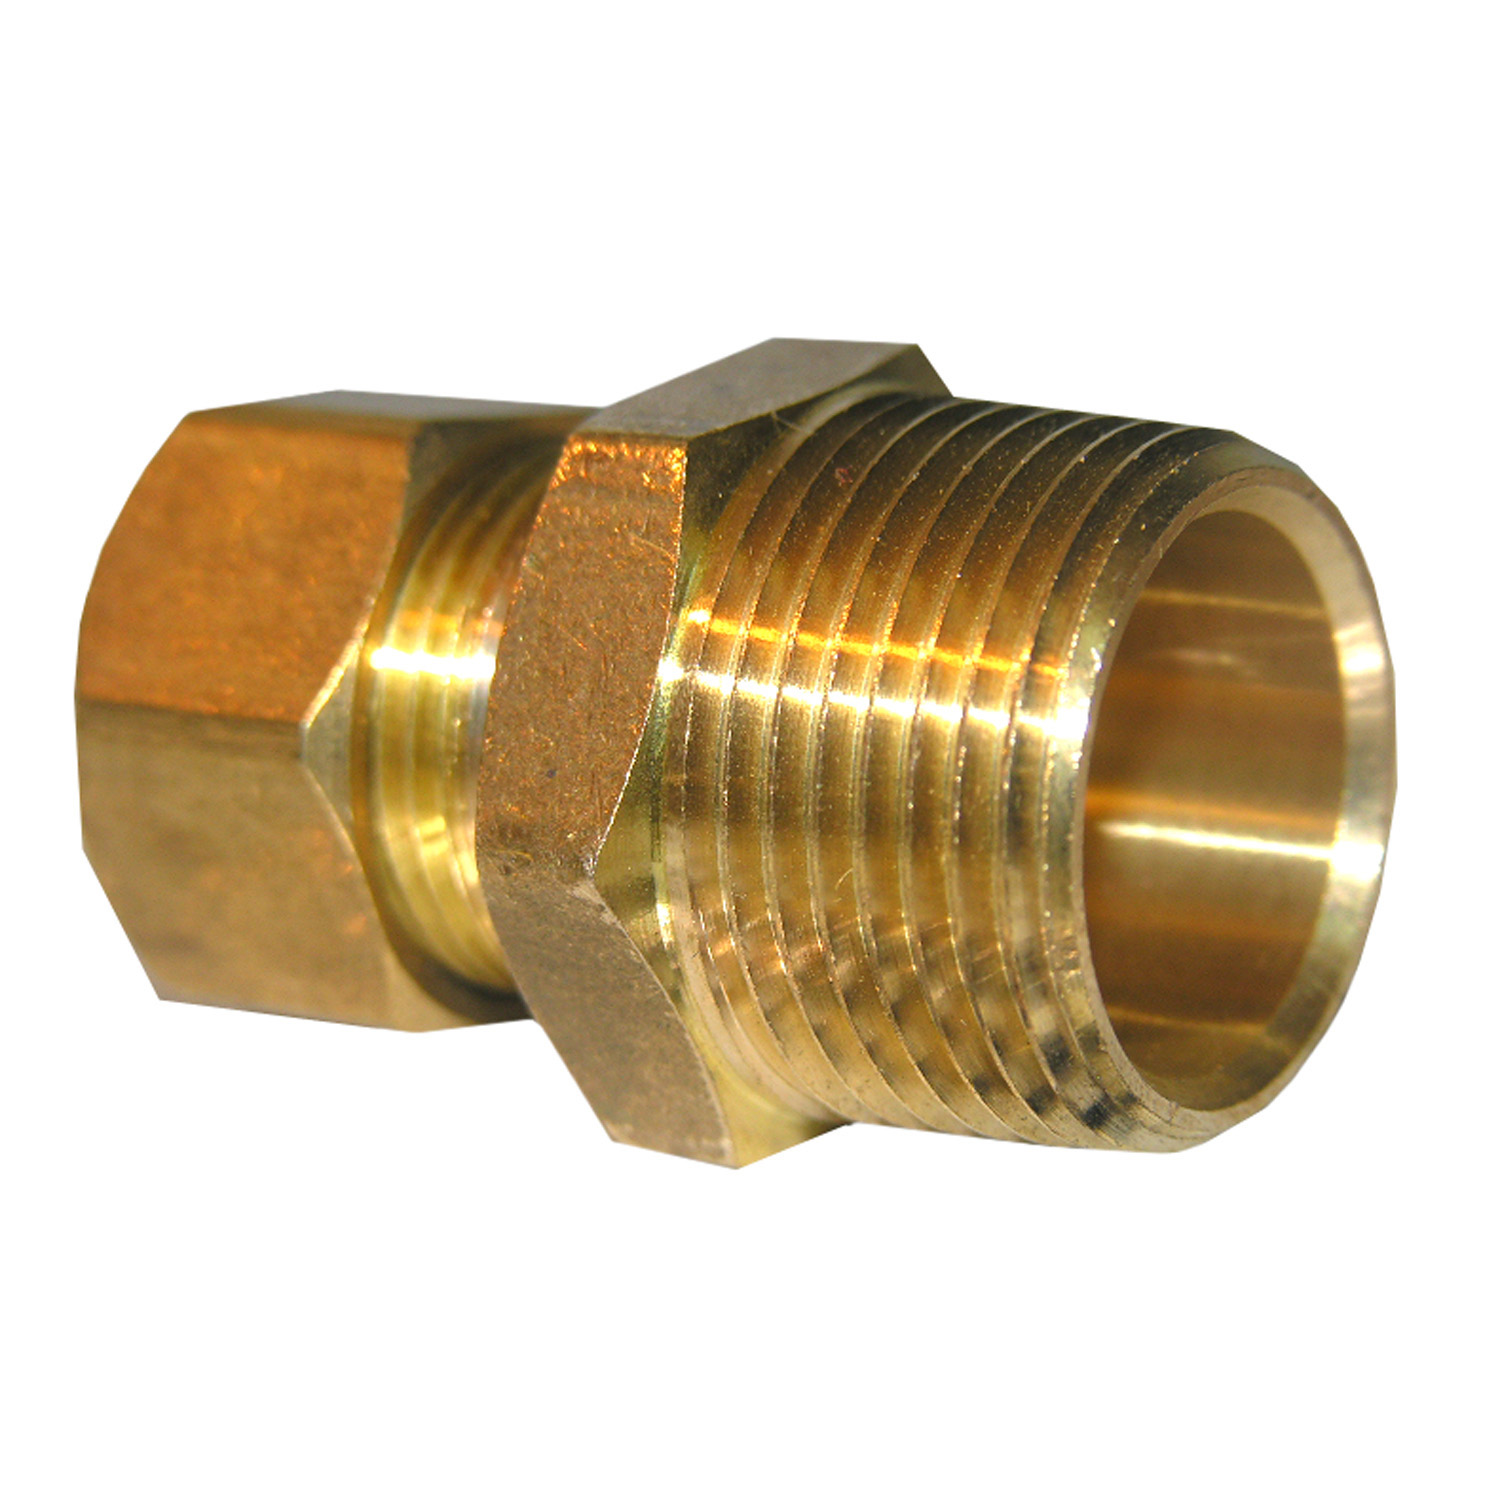 17-6861 Pipe Adapter, 5/8 x 3/4 in, Compression x MPT, Brass, 200 psi Pressure